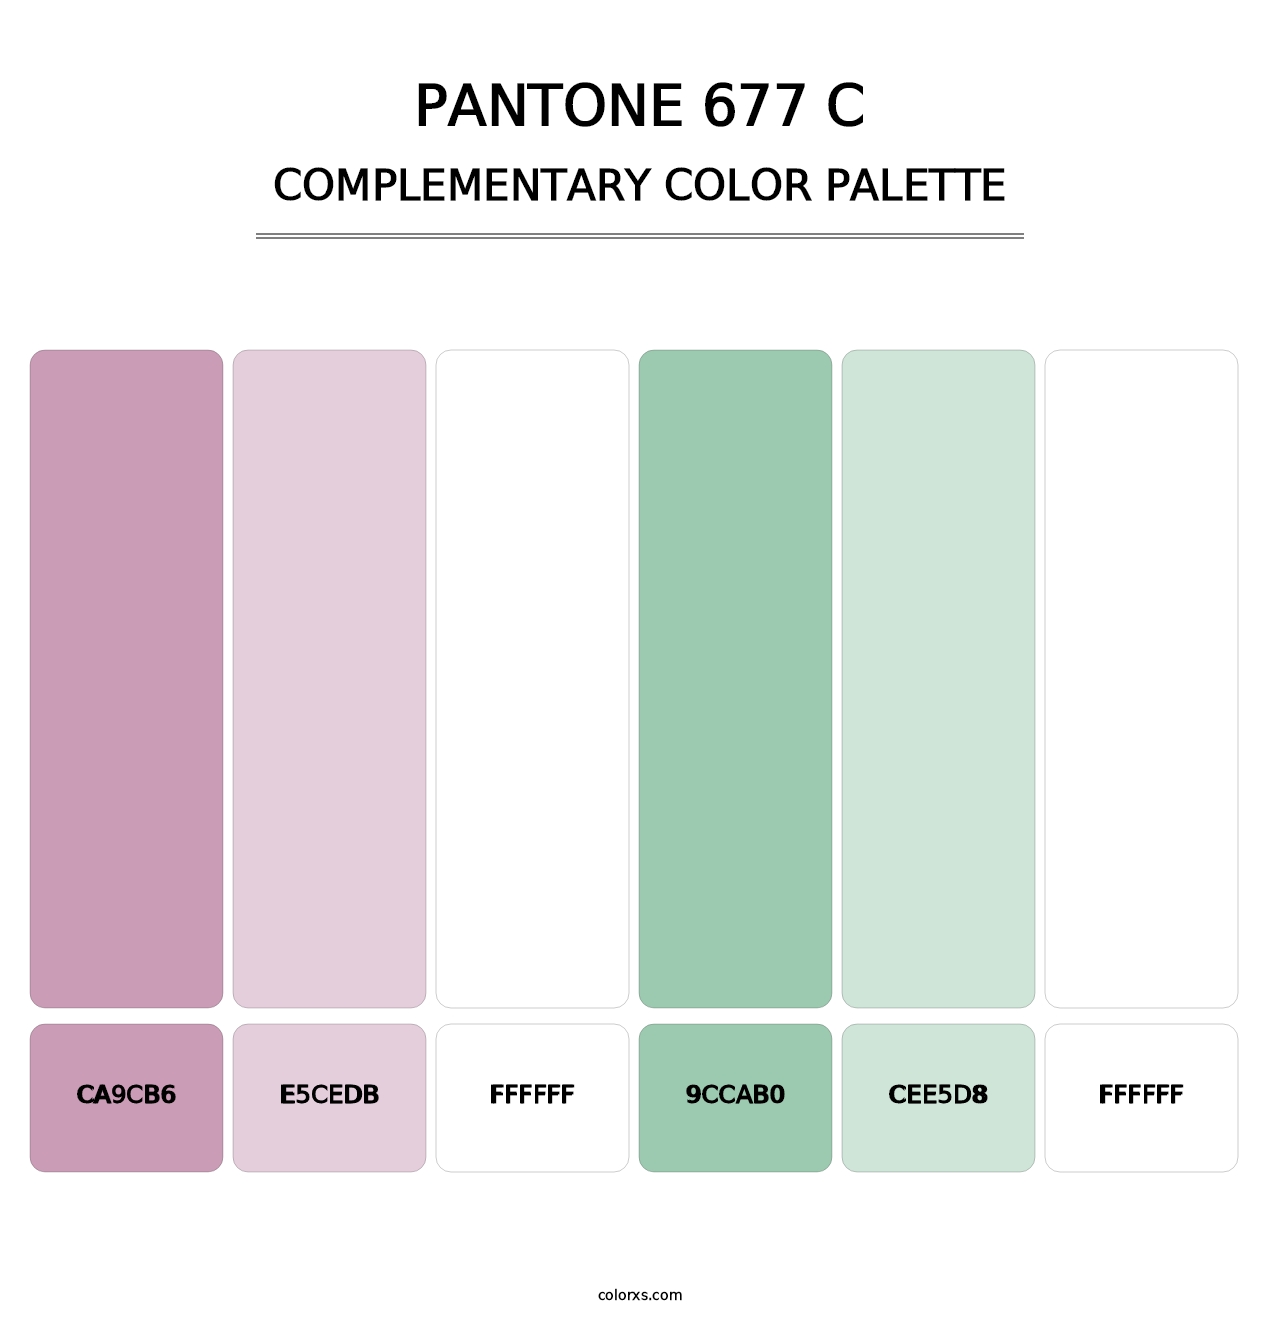 PANTONE 677 C - Complementary Color Palette